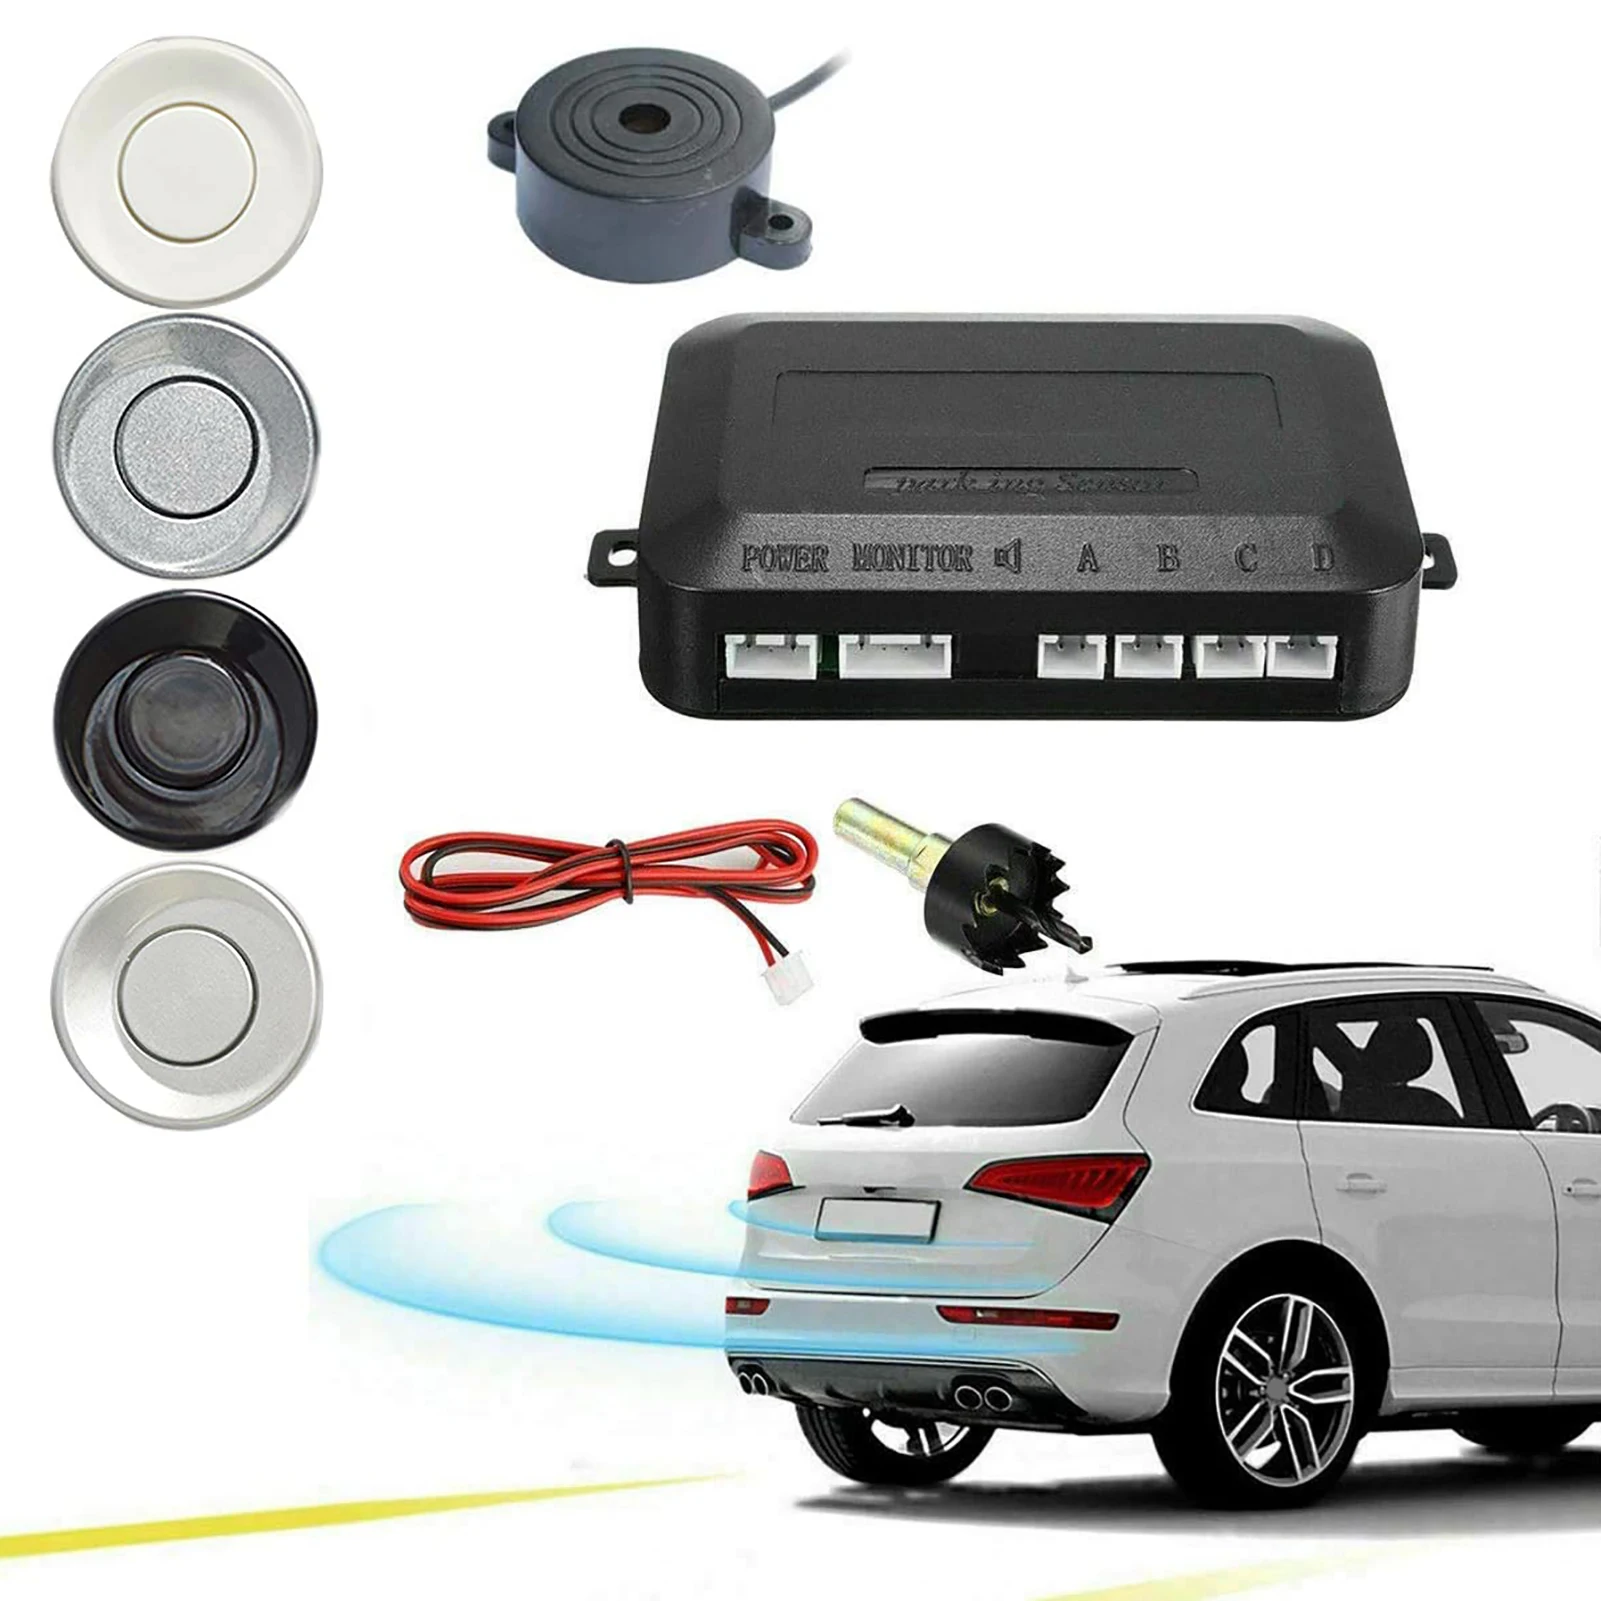 Kit de Sensor de aparcamiento inalámbrico para coche, sistema de sonda con 4 sensores universales, zumbador, 12V, 22mm, Radar de respaldo inverso